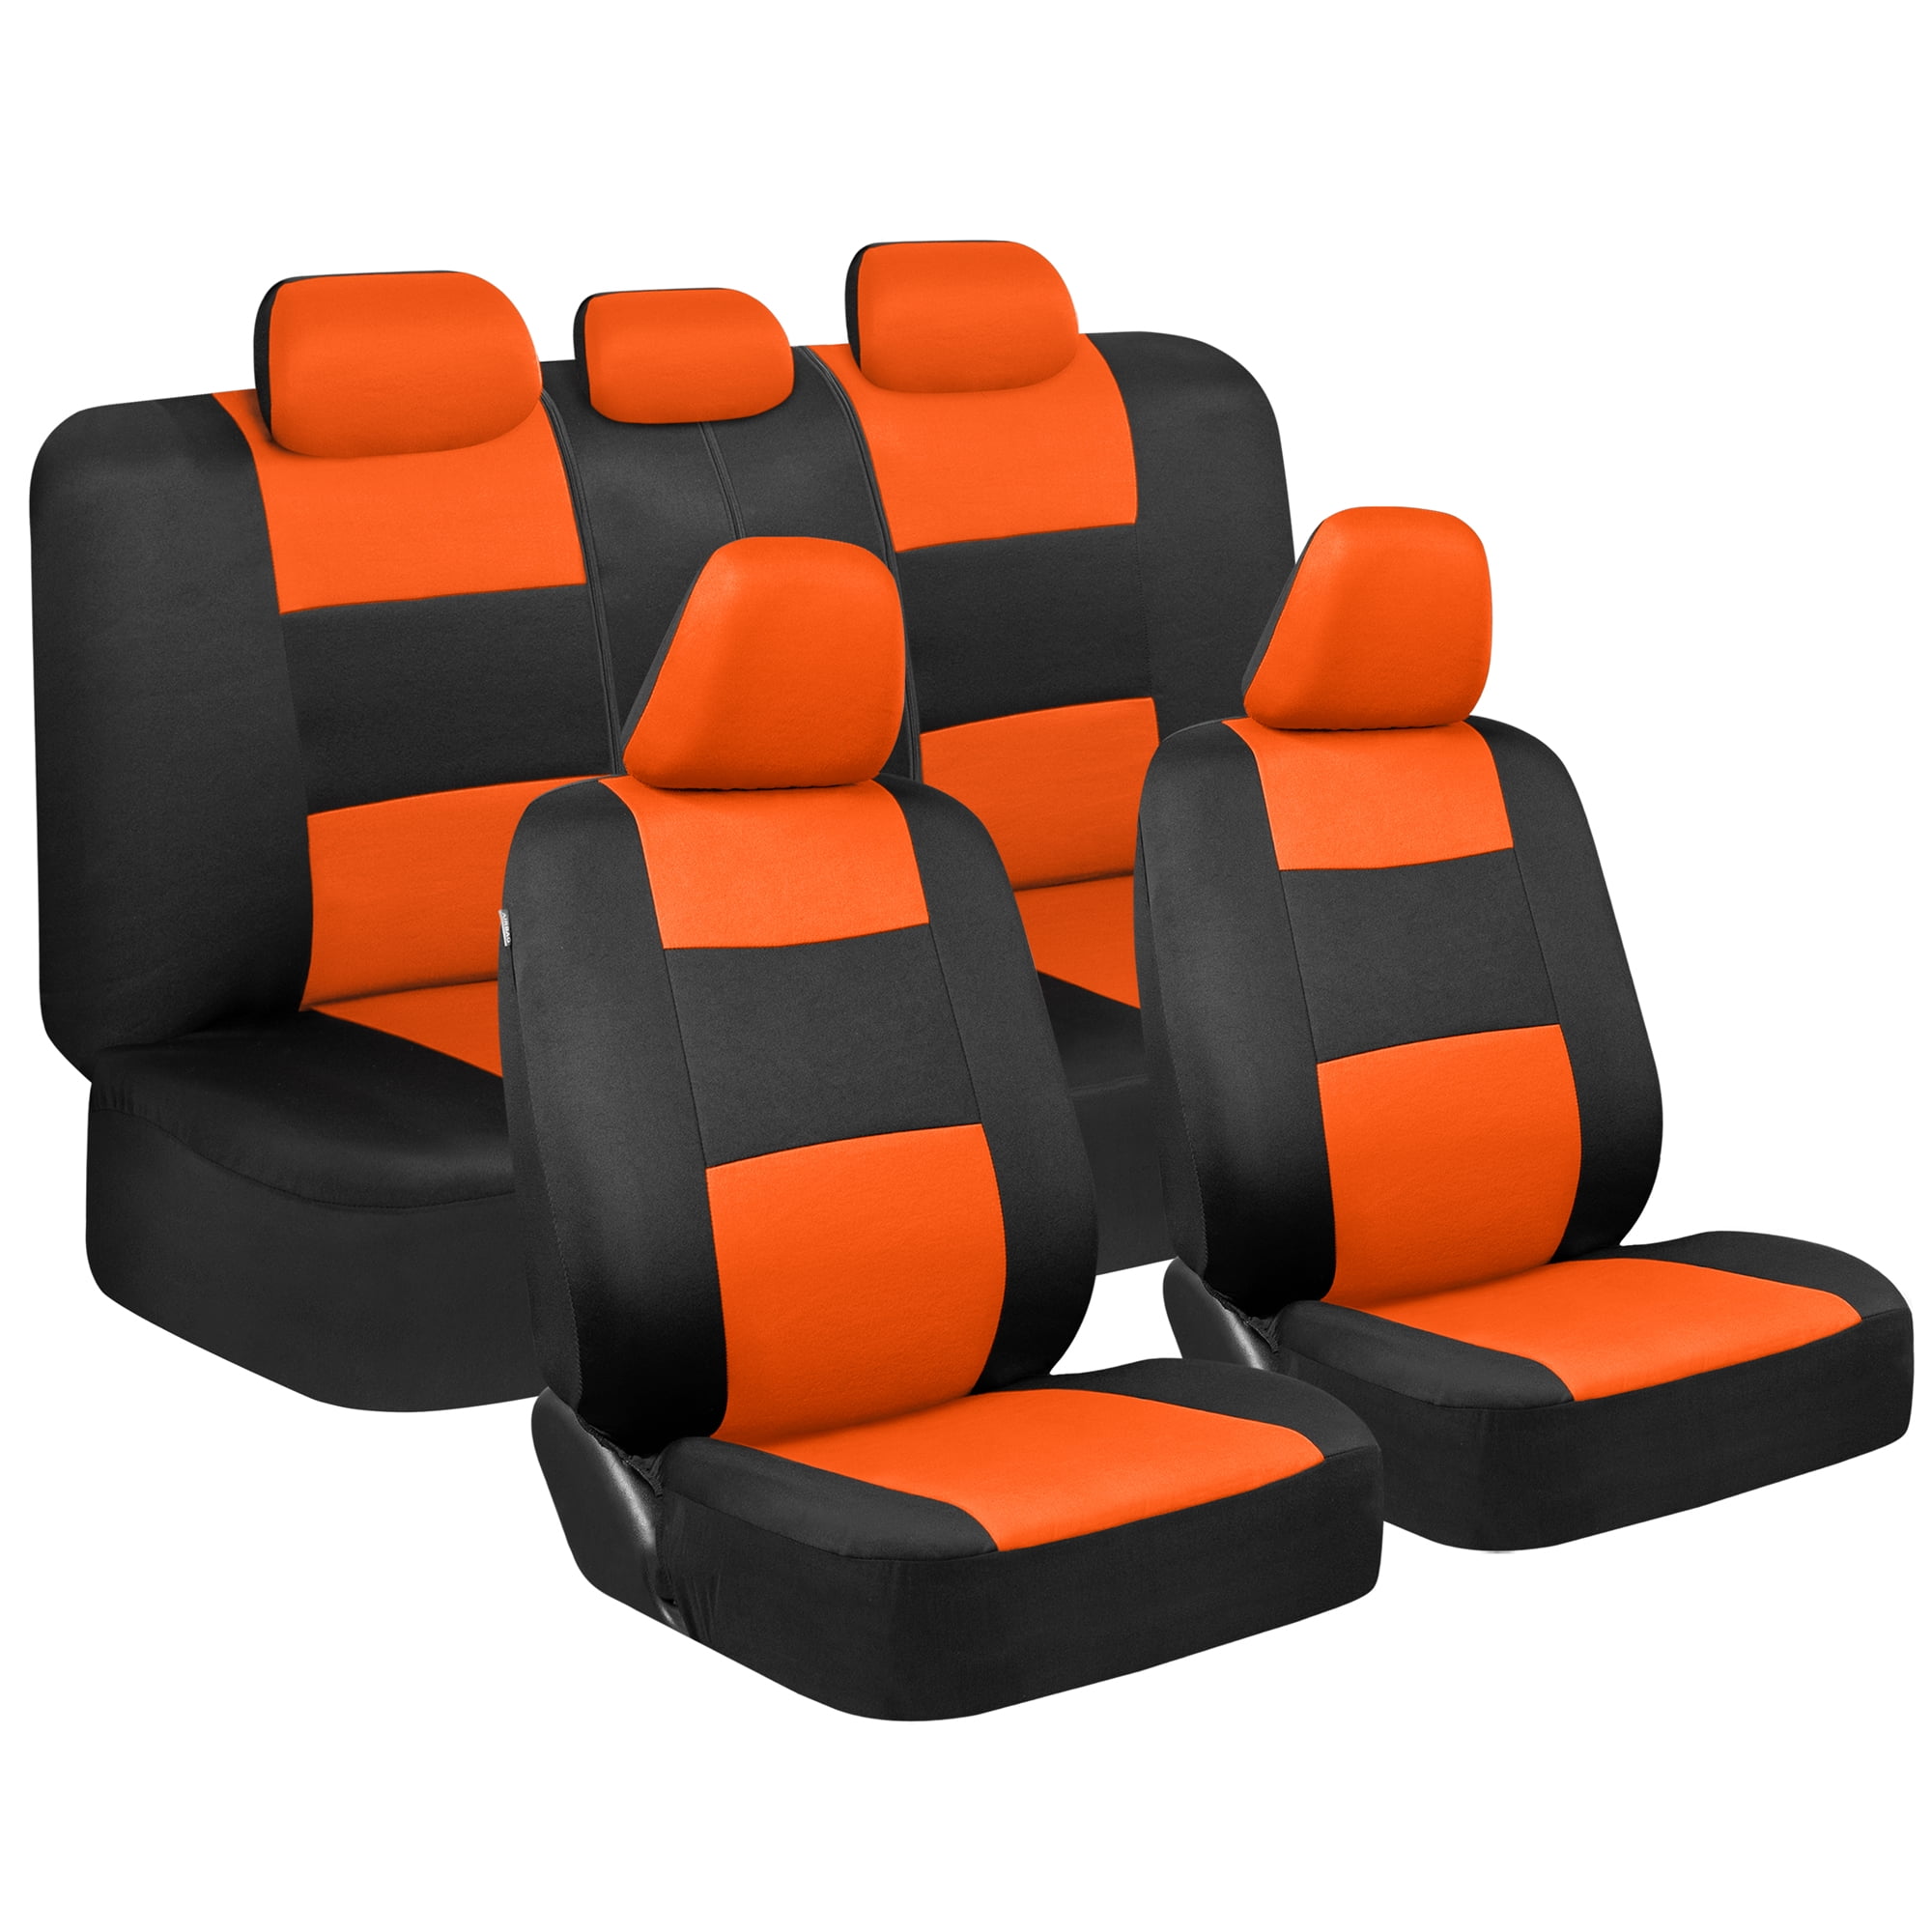 No More Dropping or Losing Things MEETOZ 2pcs Car Seat Gap Filler Hand Brake Gap Filler Pad PU Leather for All Vehicles Black